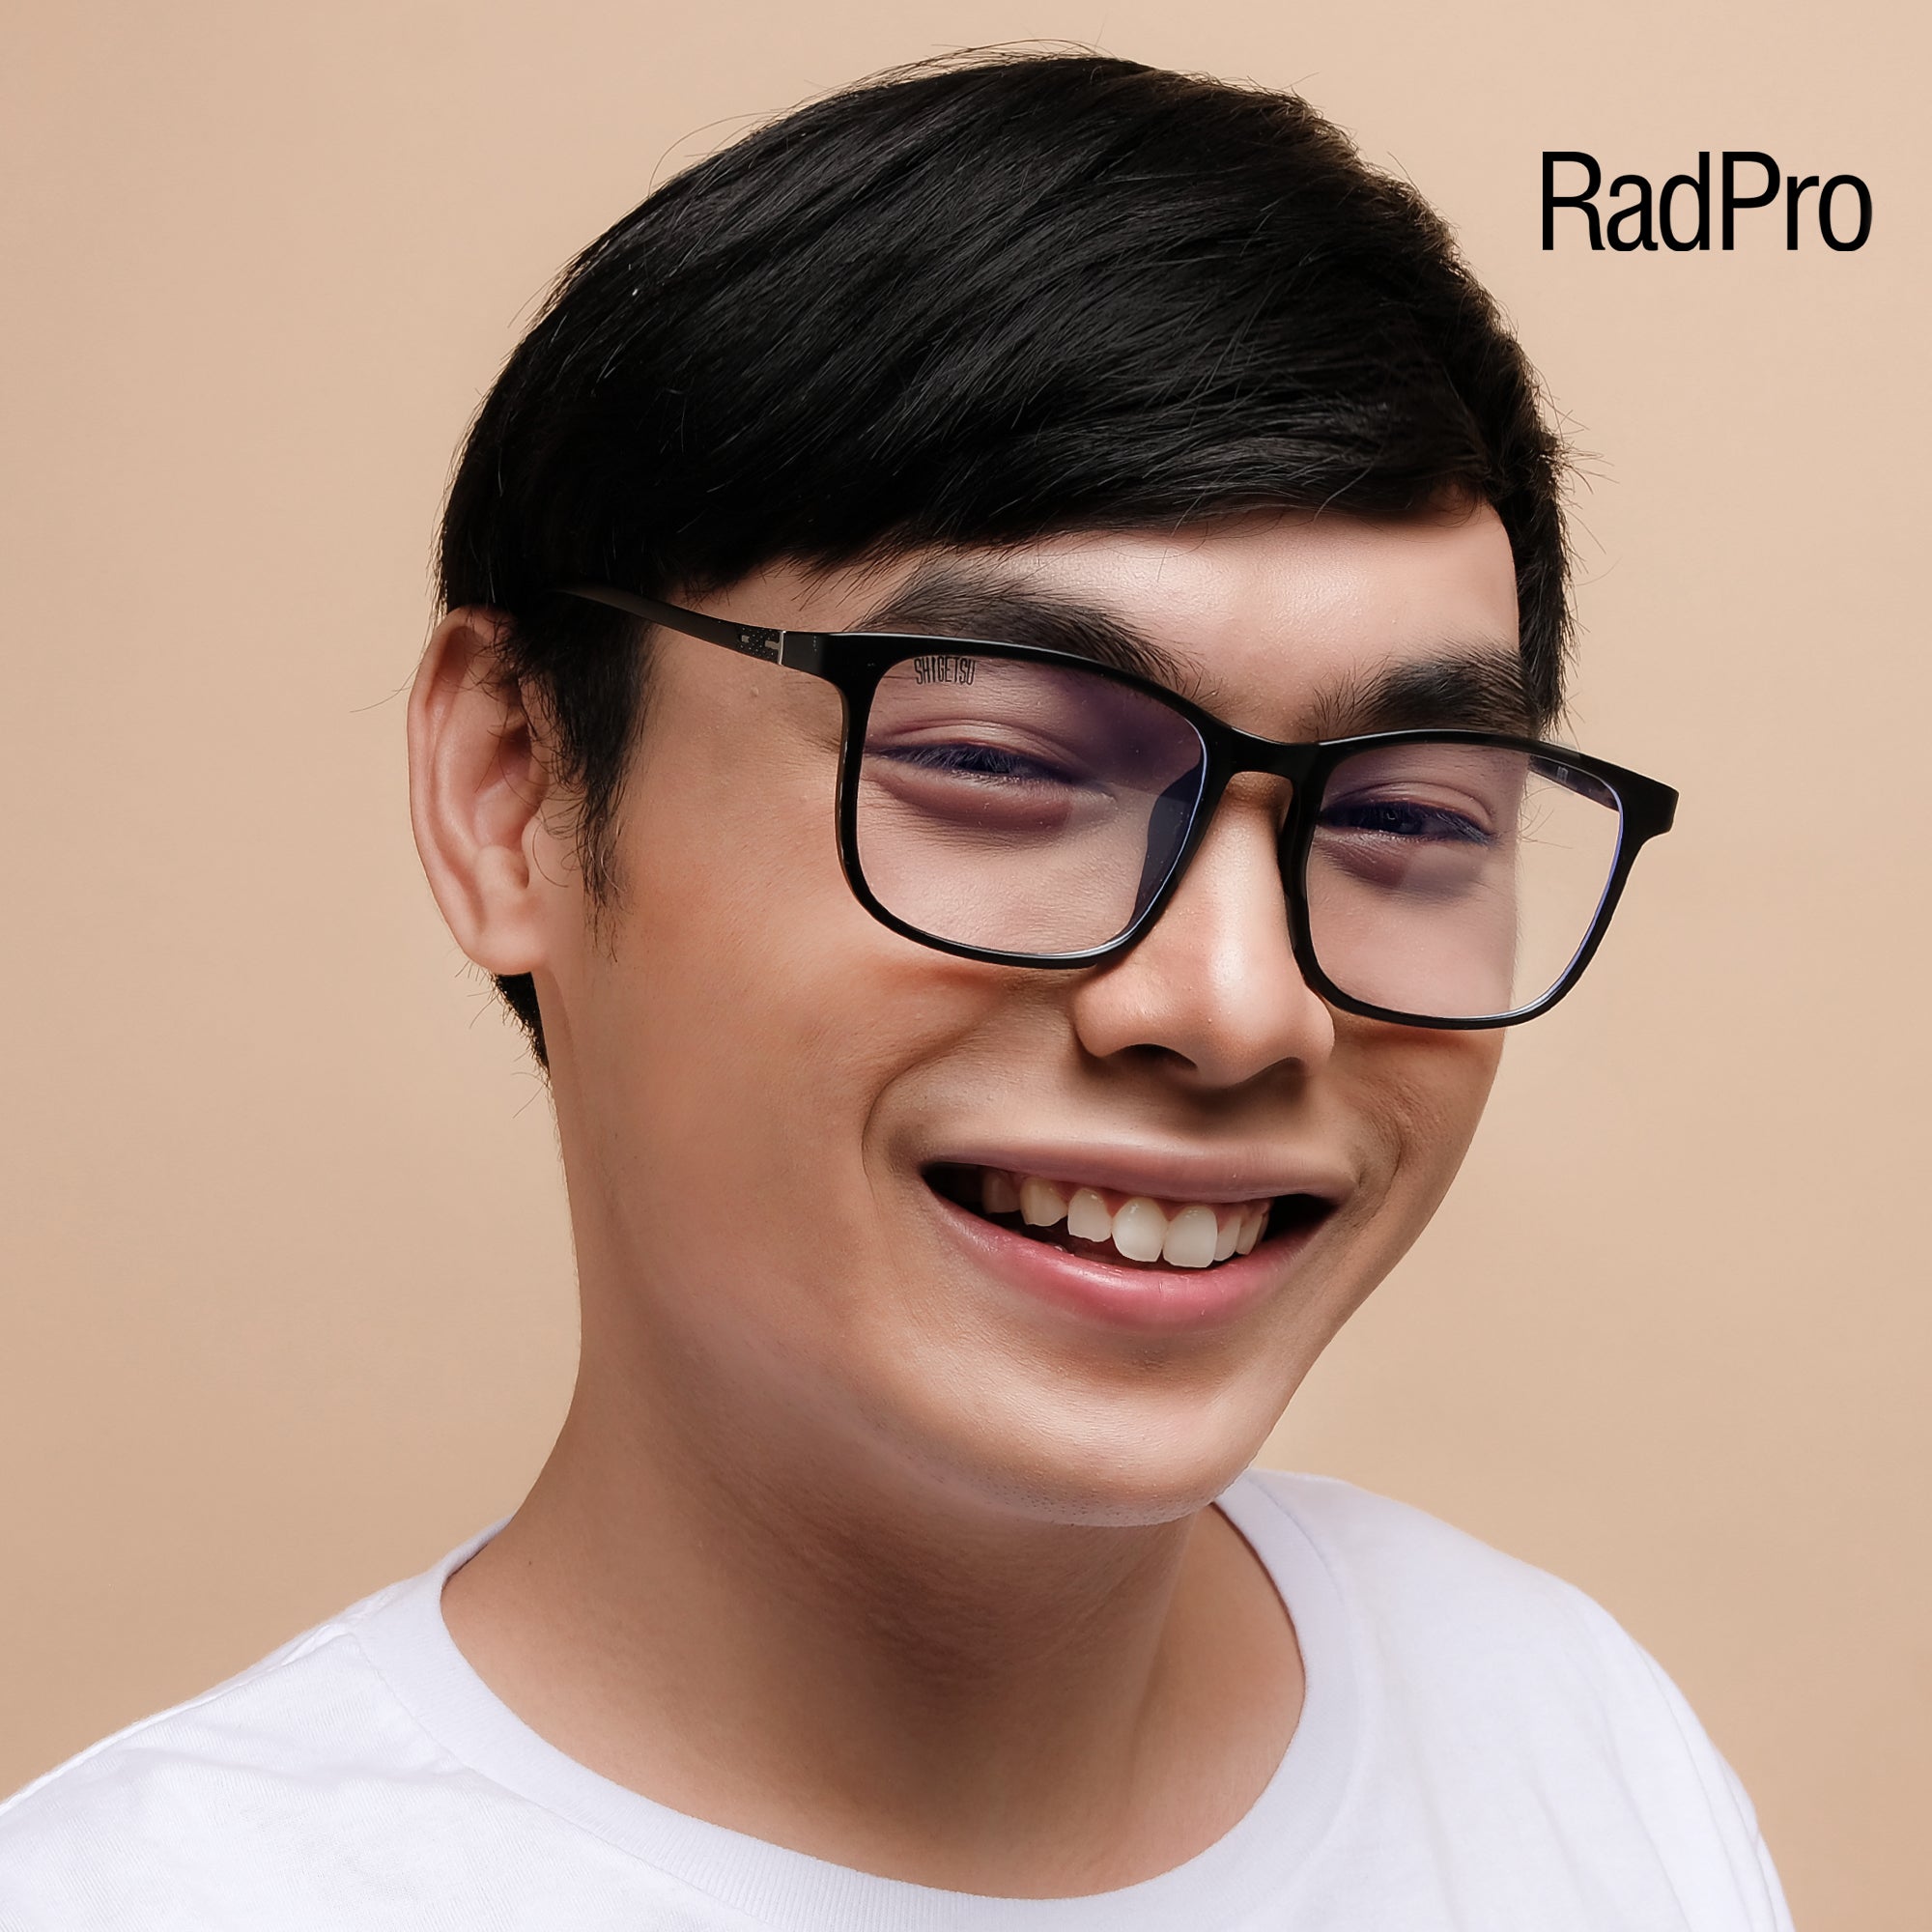 IIZUKA Radpro Eyeglasses